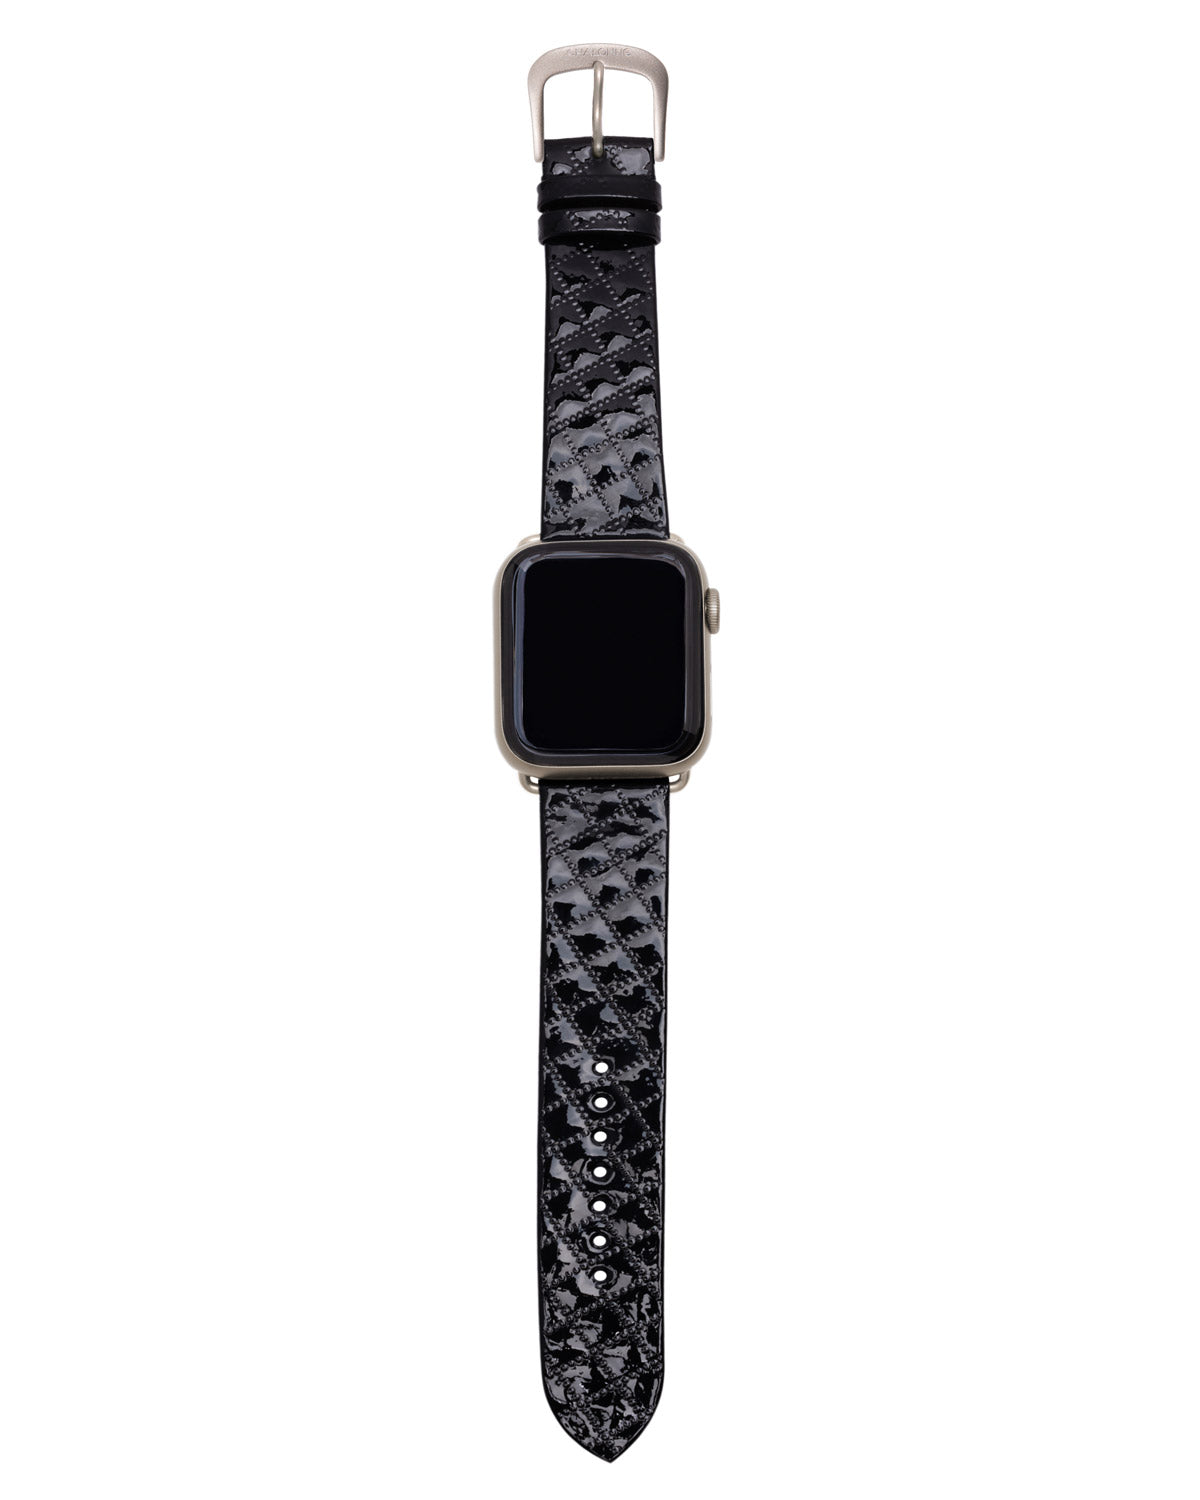 Patent Leather, Grid Pattern, Apple Watch Band - Chalonne